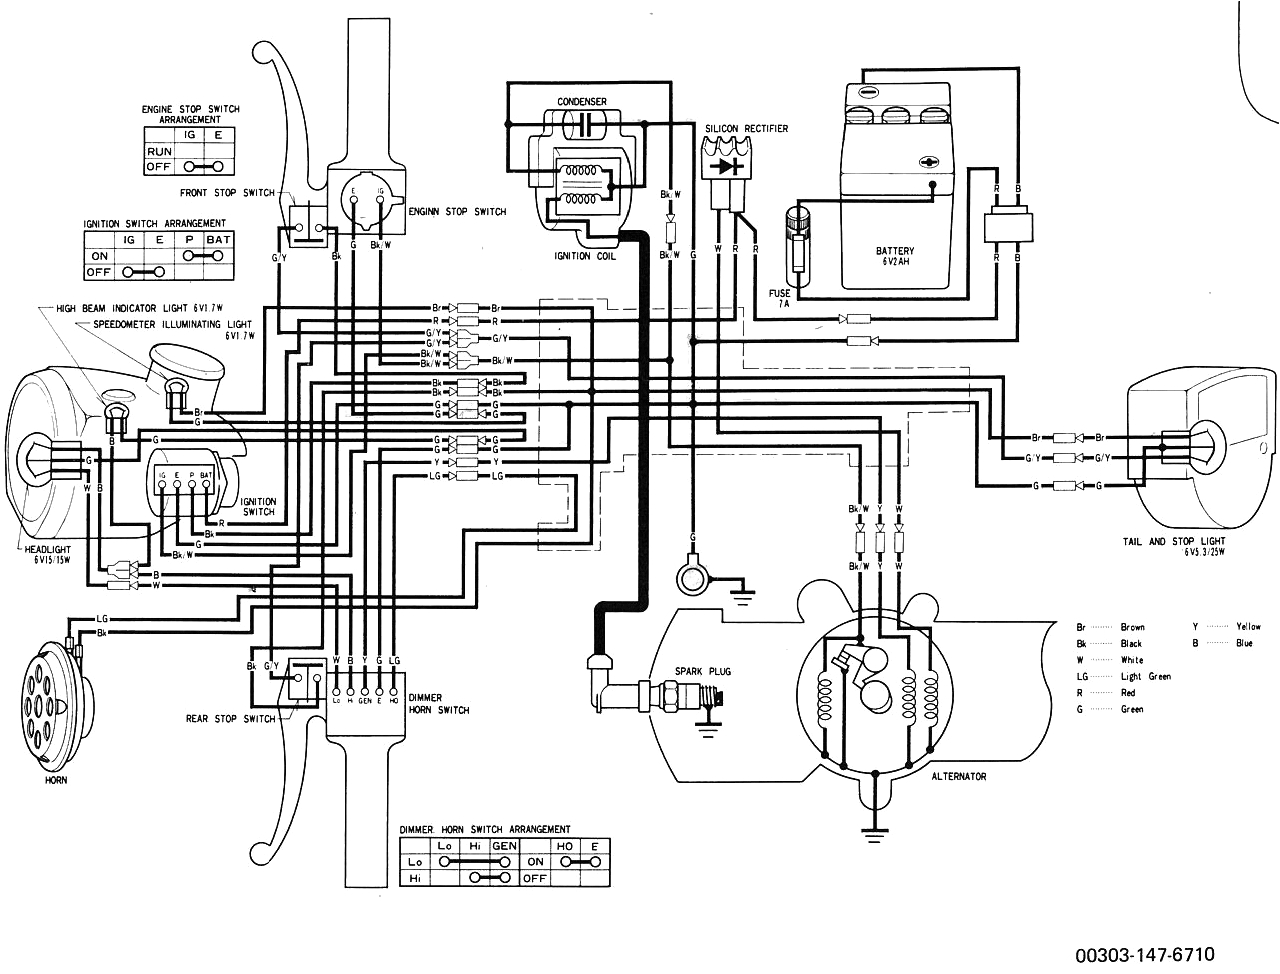 1982 Honda Express Wiring Diagram Ra 4044 1981 Honda Express Wiring Diagram Download Diagram